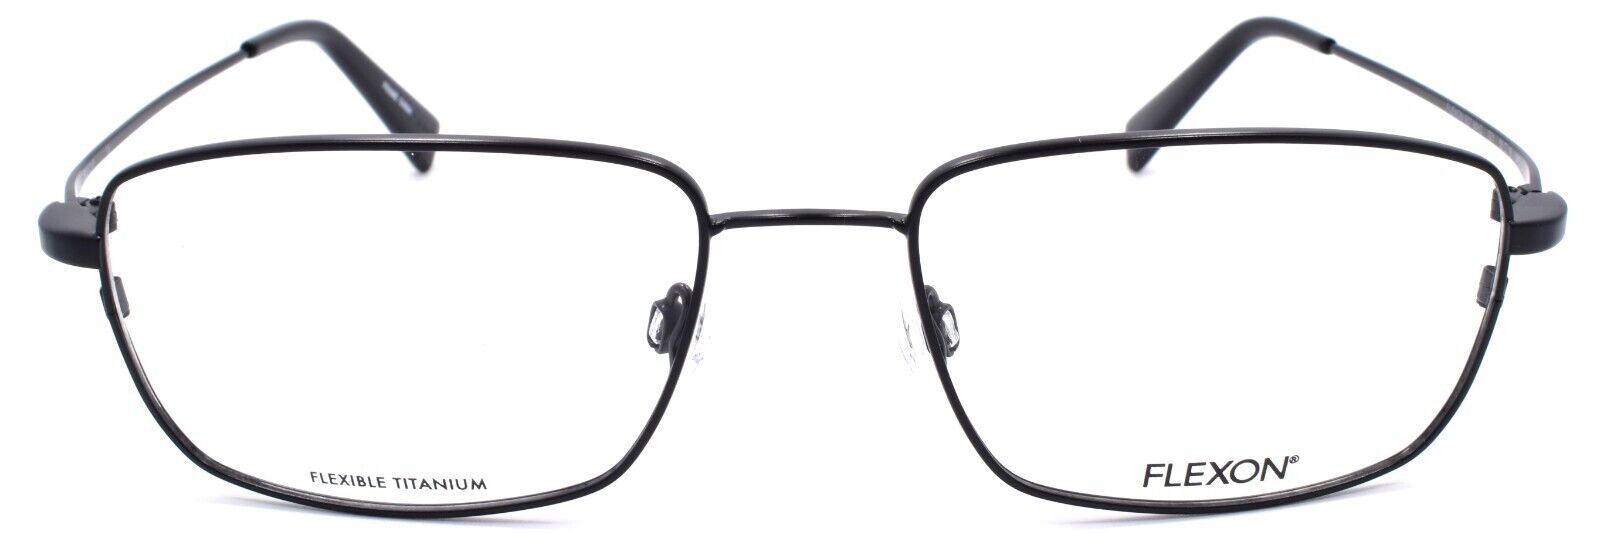 4-Flexon FLX 907 MAG 001 Men's Eyeglasses Black 56-18-145 + Clip On Sunglasses-883900203708-IKSpecs